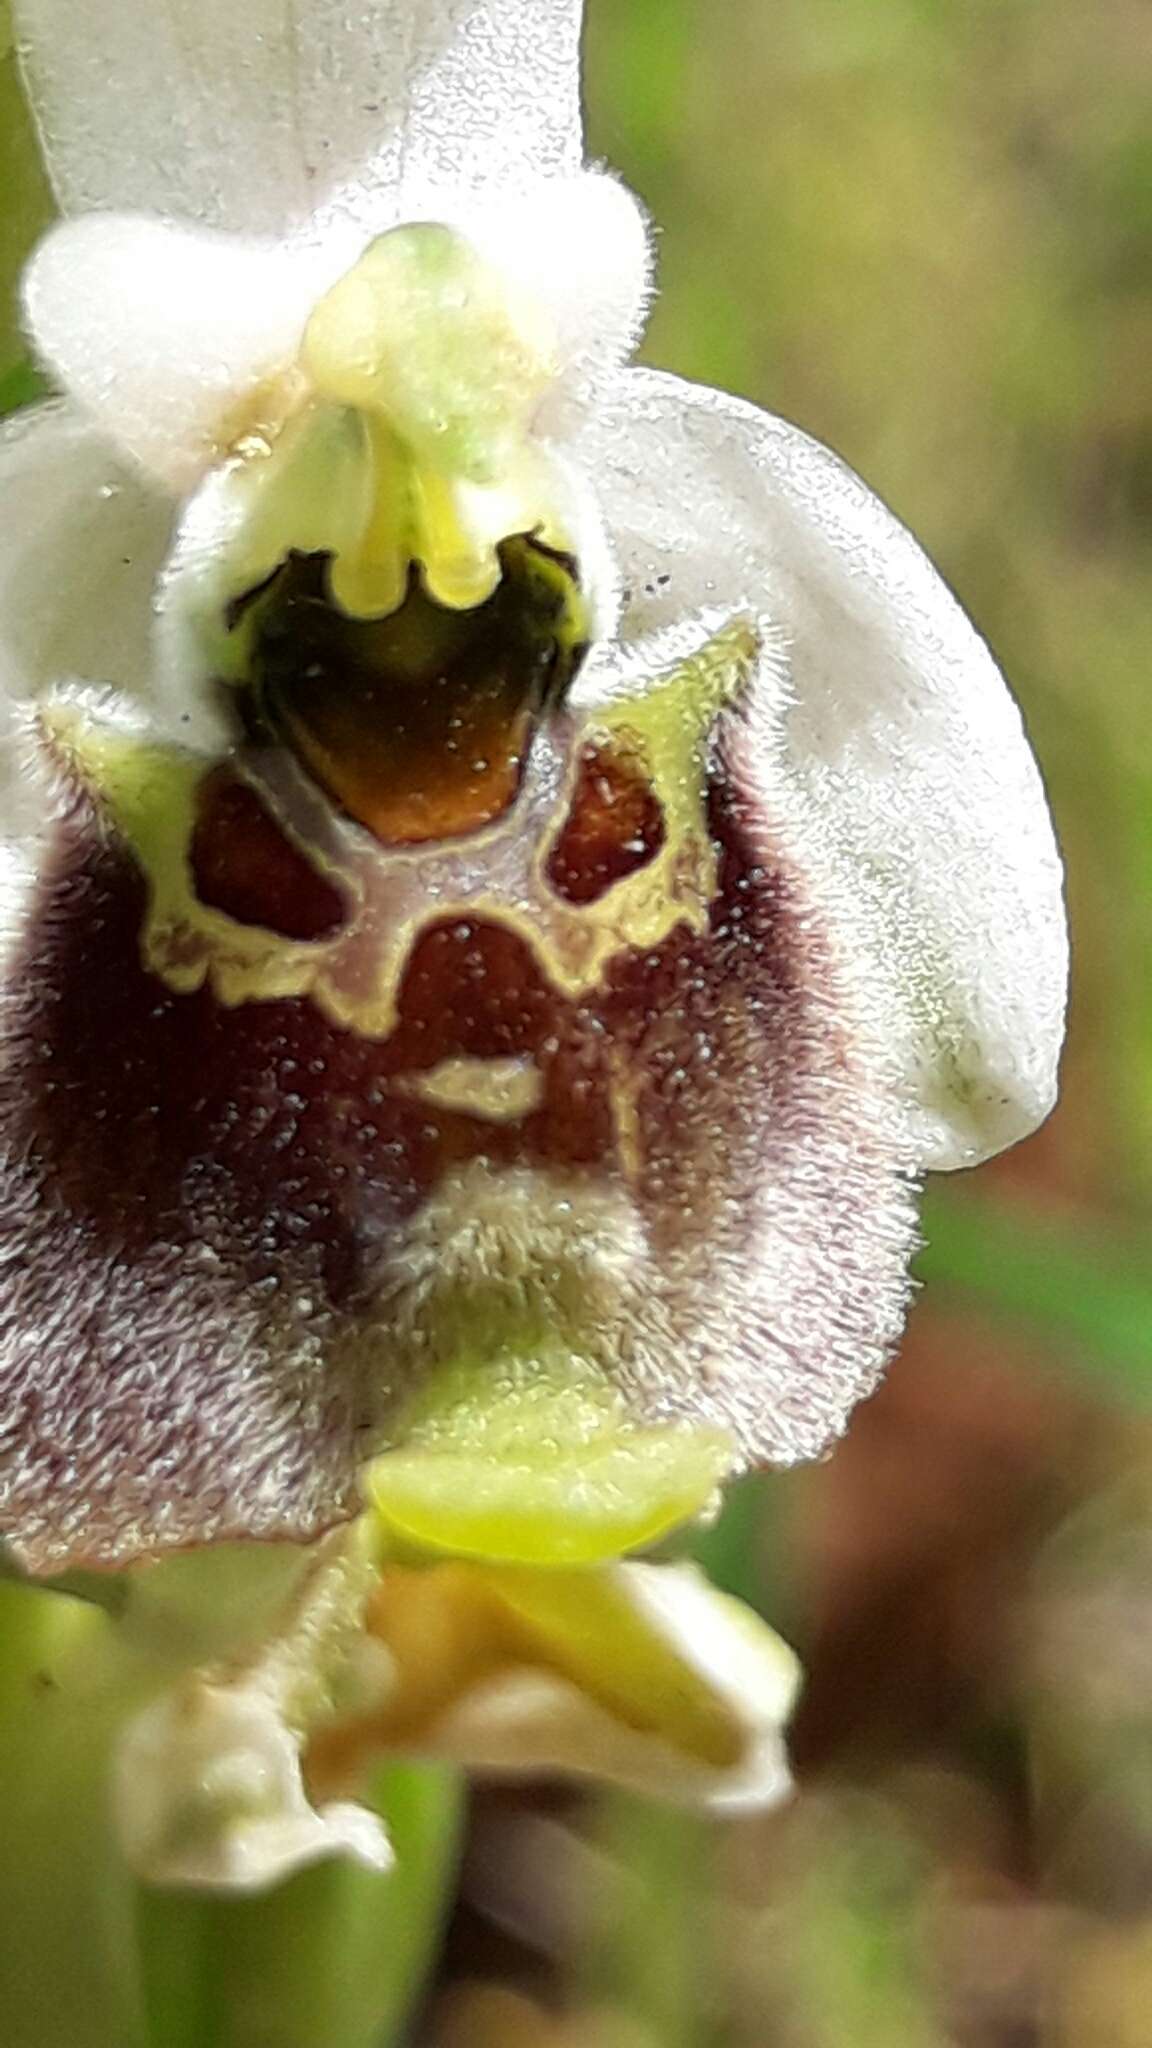 Image of Ophrys fuciflora subsp. bornmuelleri (M. Schulze) B. Willing & E. Willing